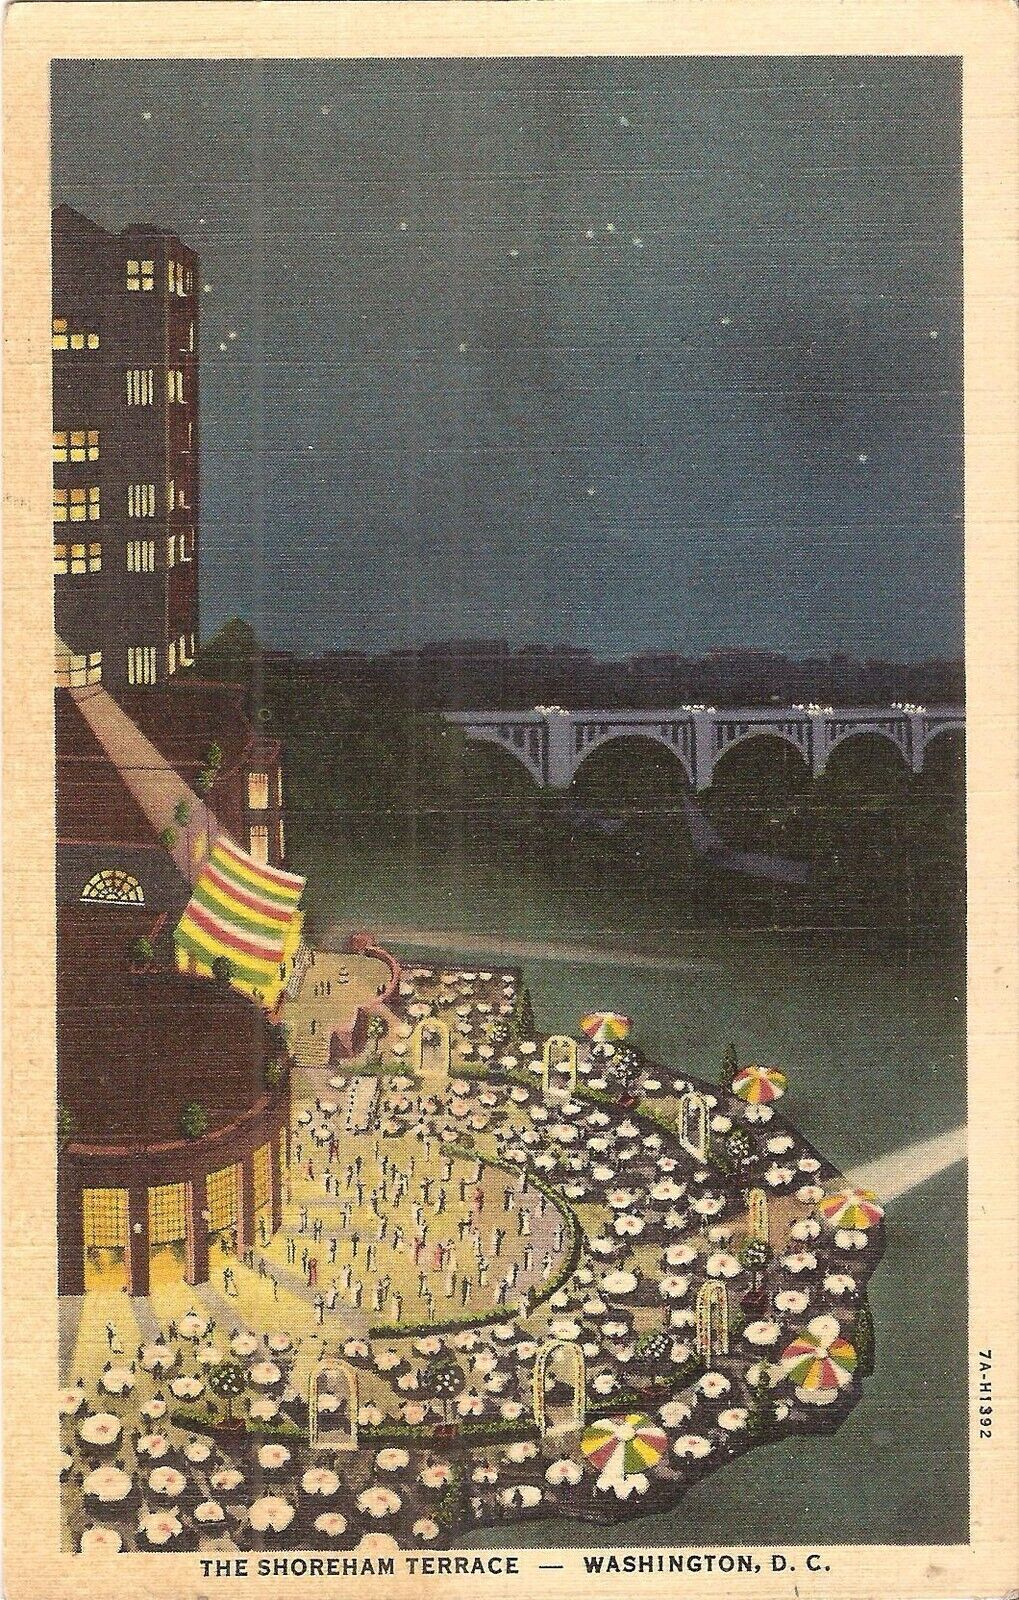 WASHINGTON, D.C. - Shoreham Terrace Restaurant - 1937 - ADVERTISING